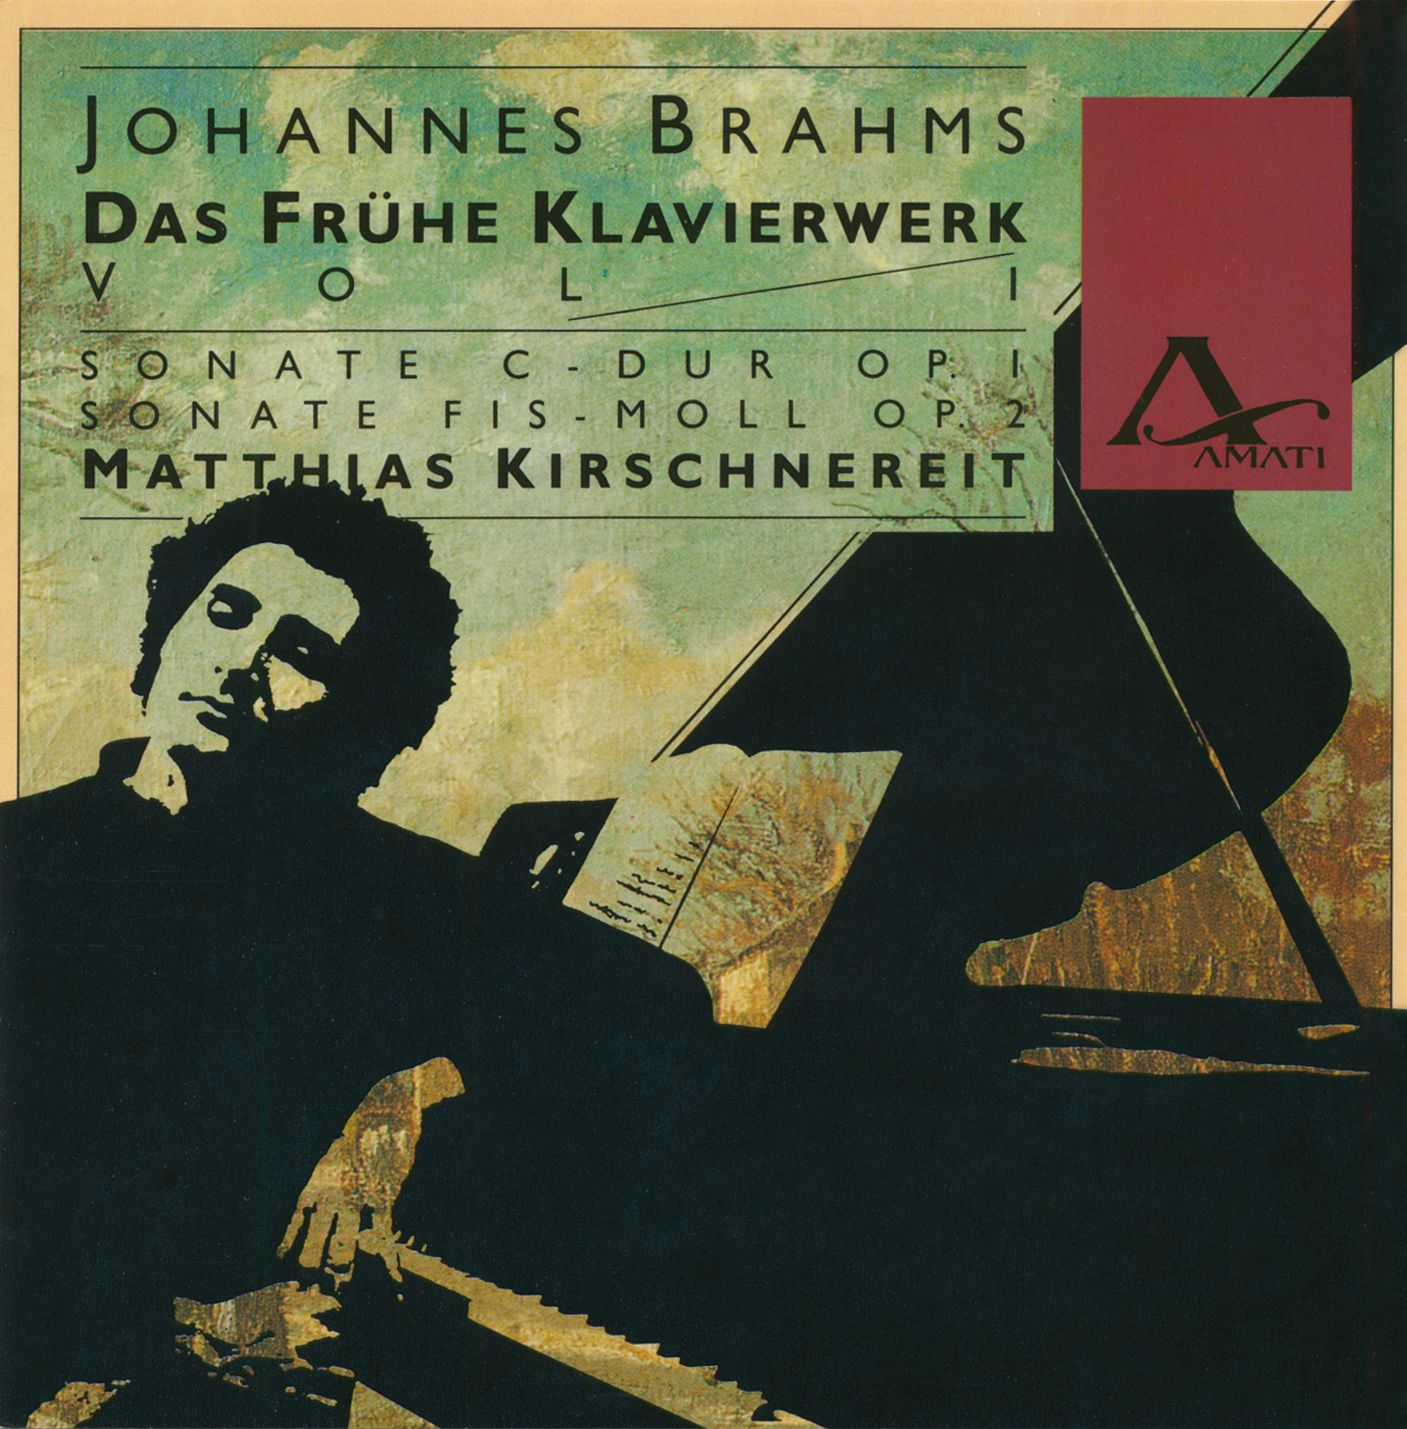 Johannes Brahms - Das frühe Klavierwerk Vol.1